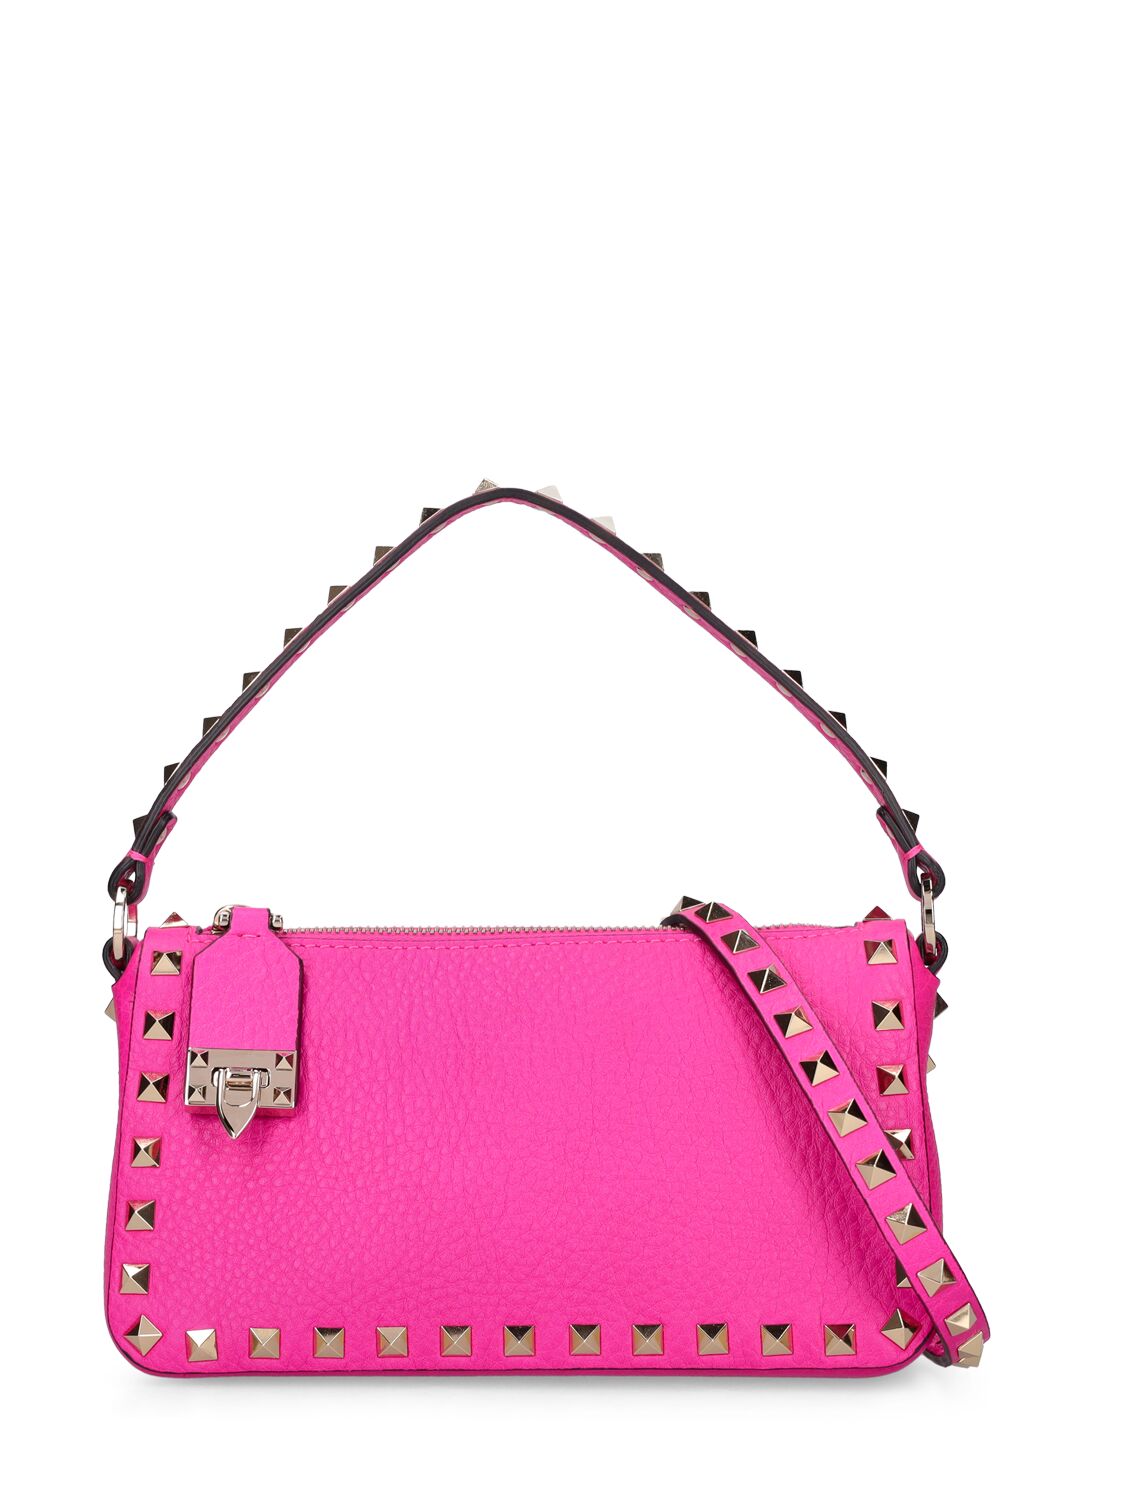 Valentino Garavani Small Rockstud Leather Shoulder Bag In Pink